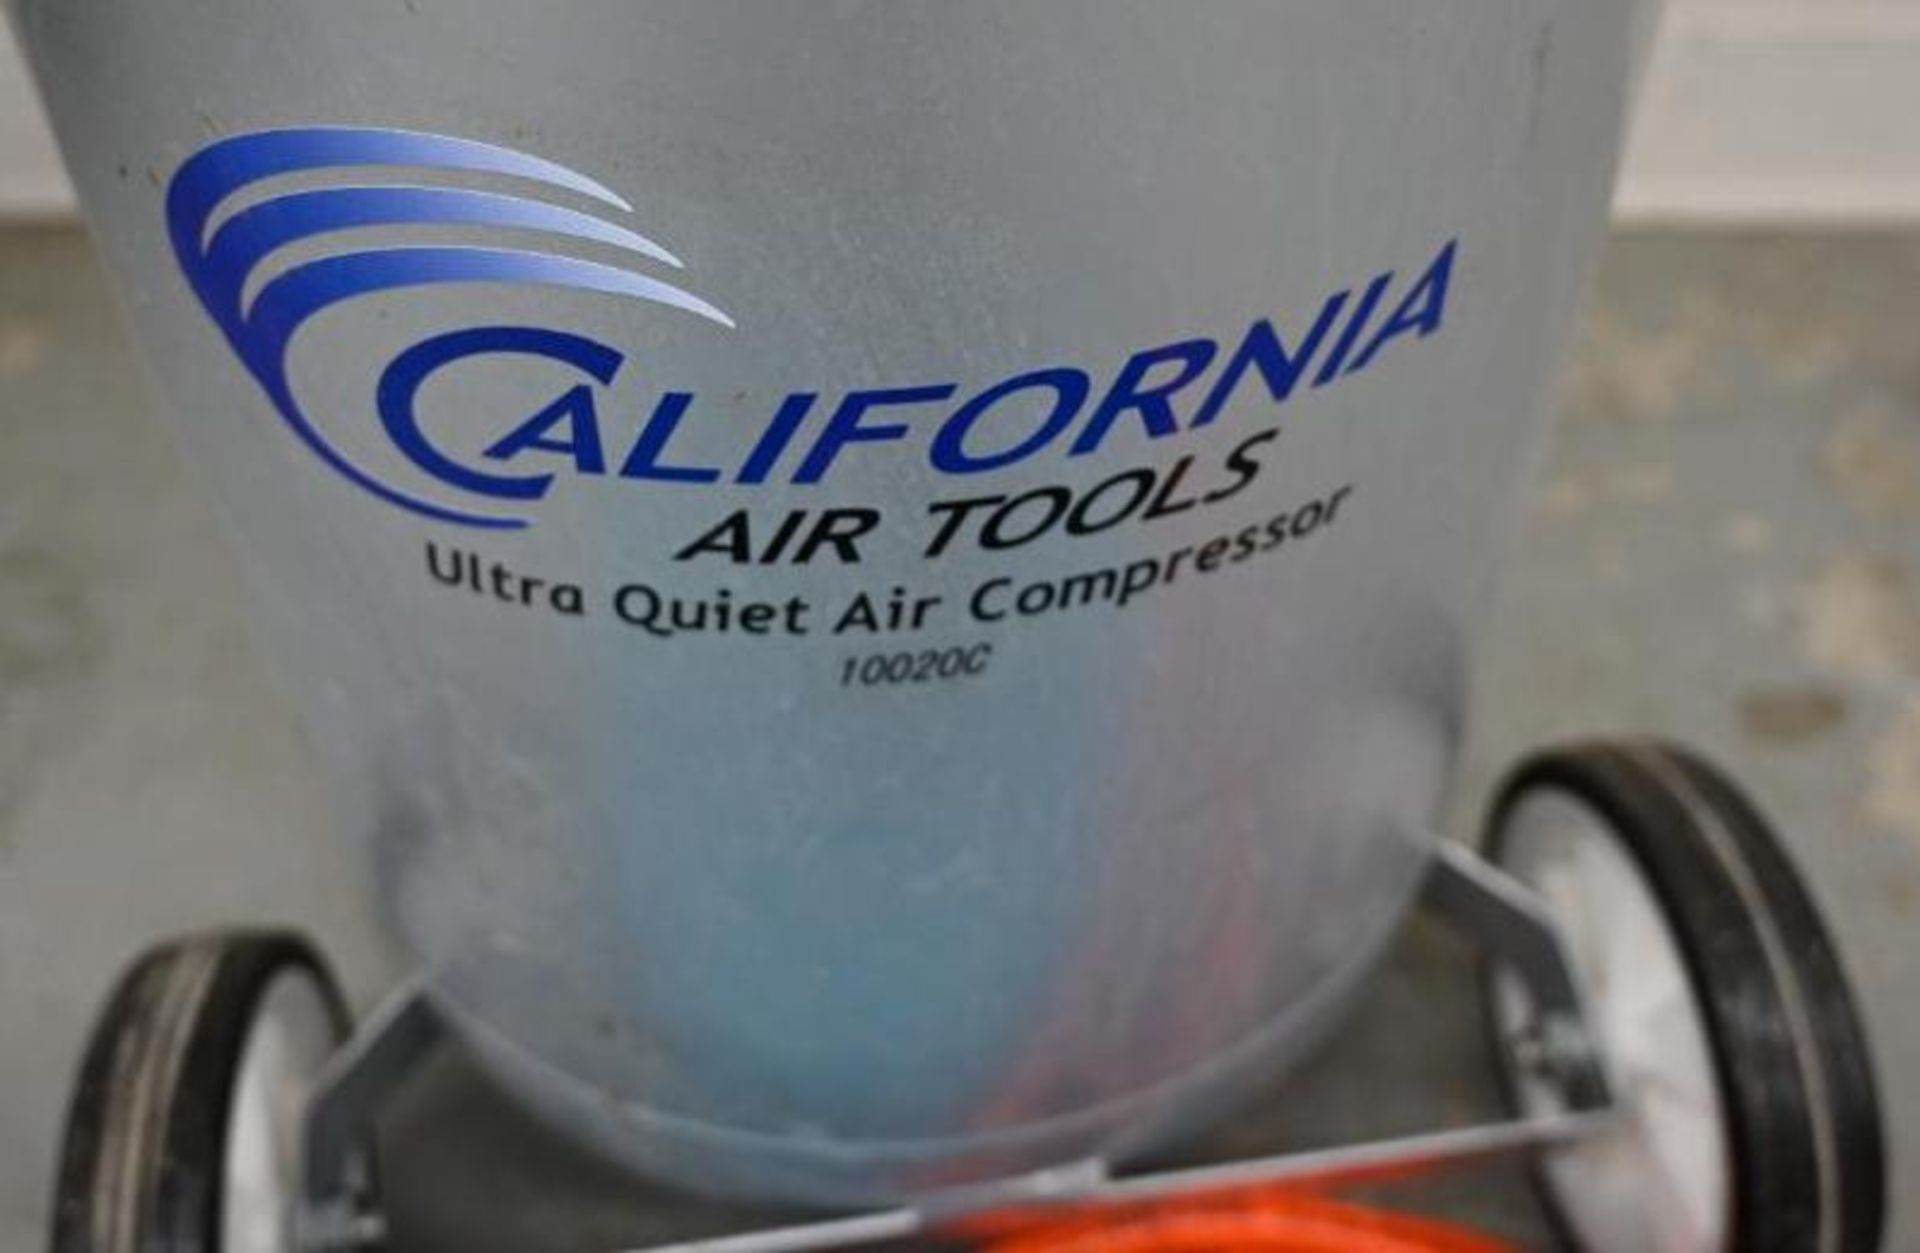 California Ultra Quiet Air Compressor with Hose - Image 4 of 11